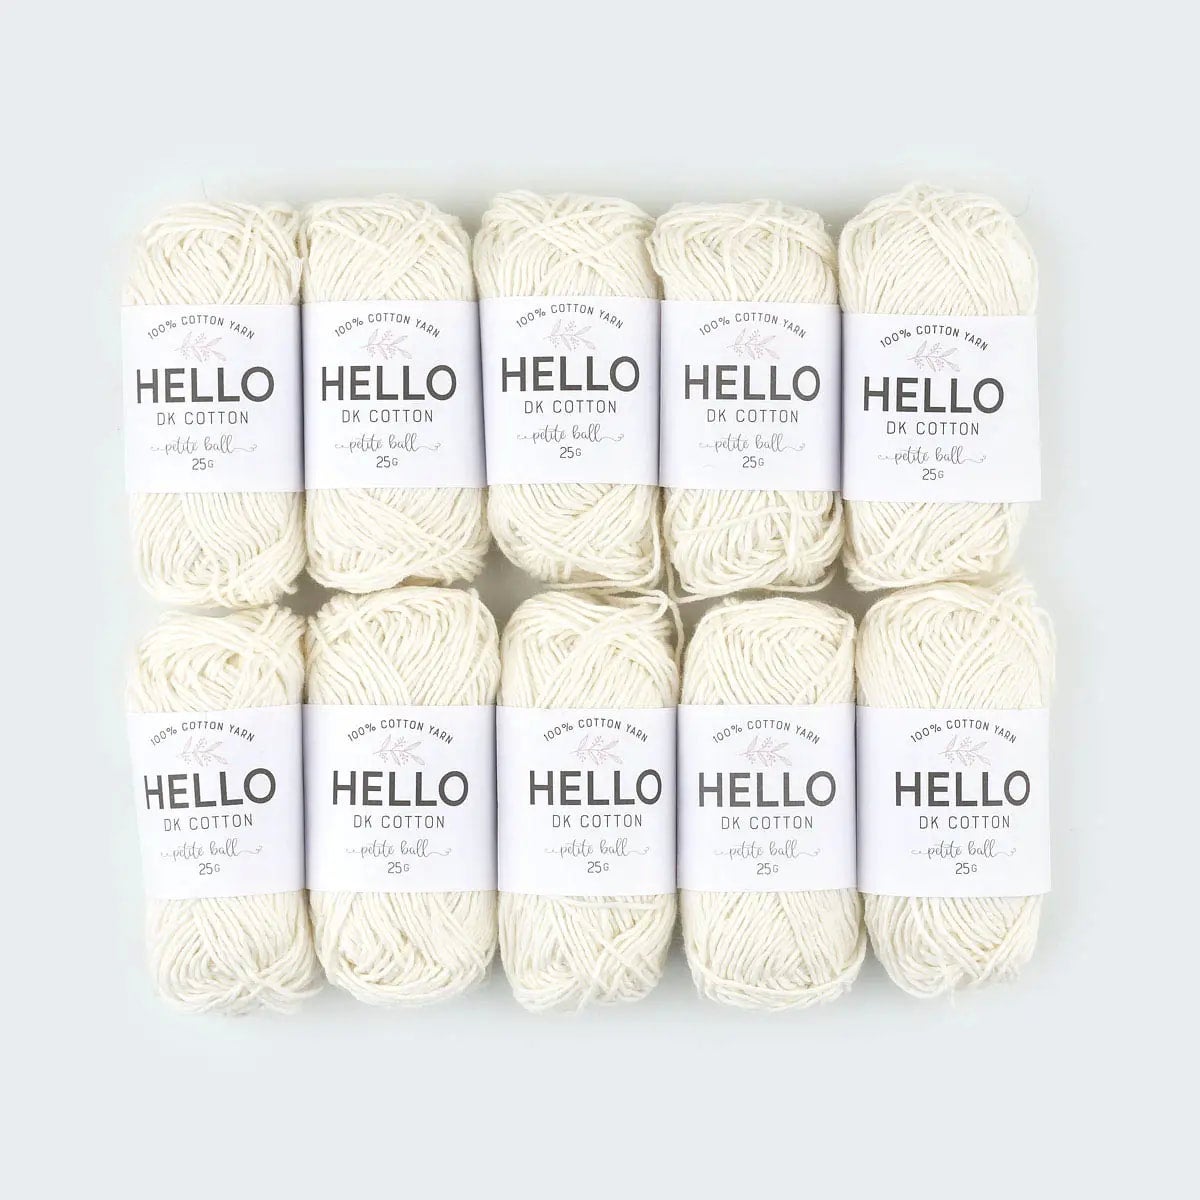 HELLO 100% Cotton 25g Amigurumi Yarn by Creative World